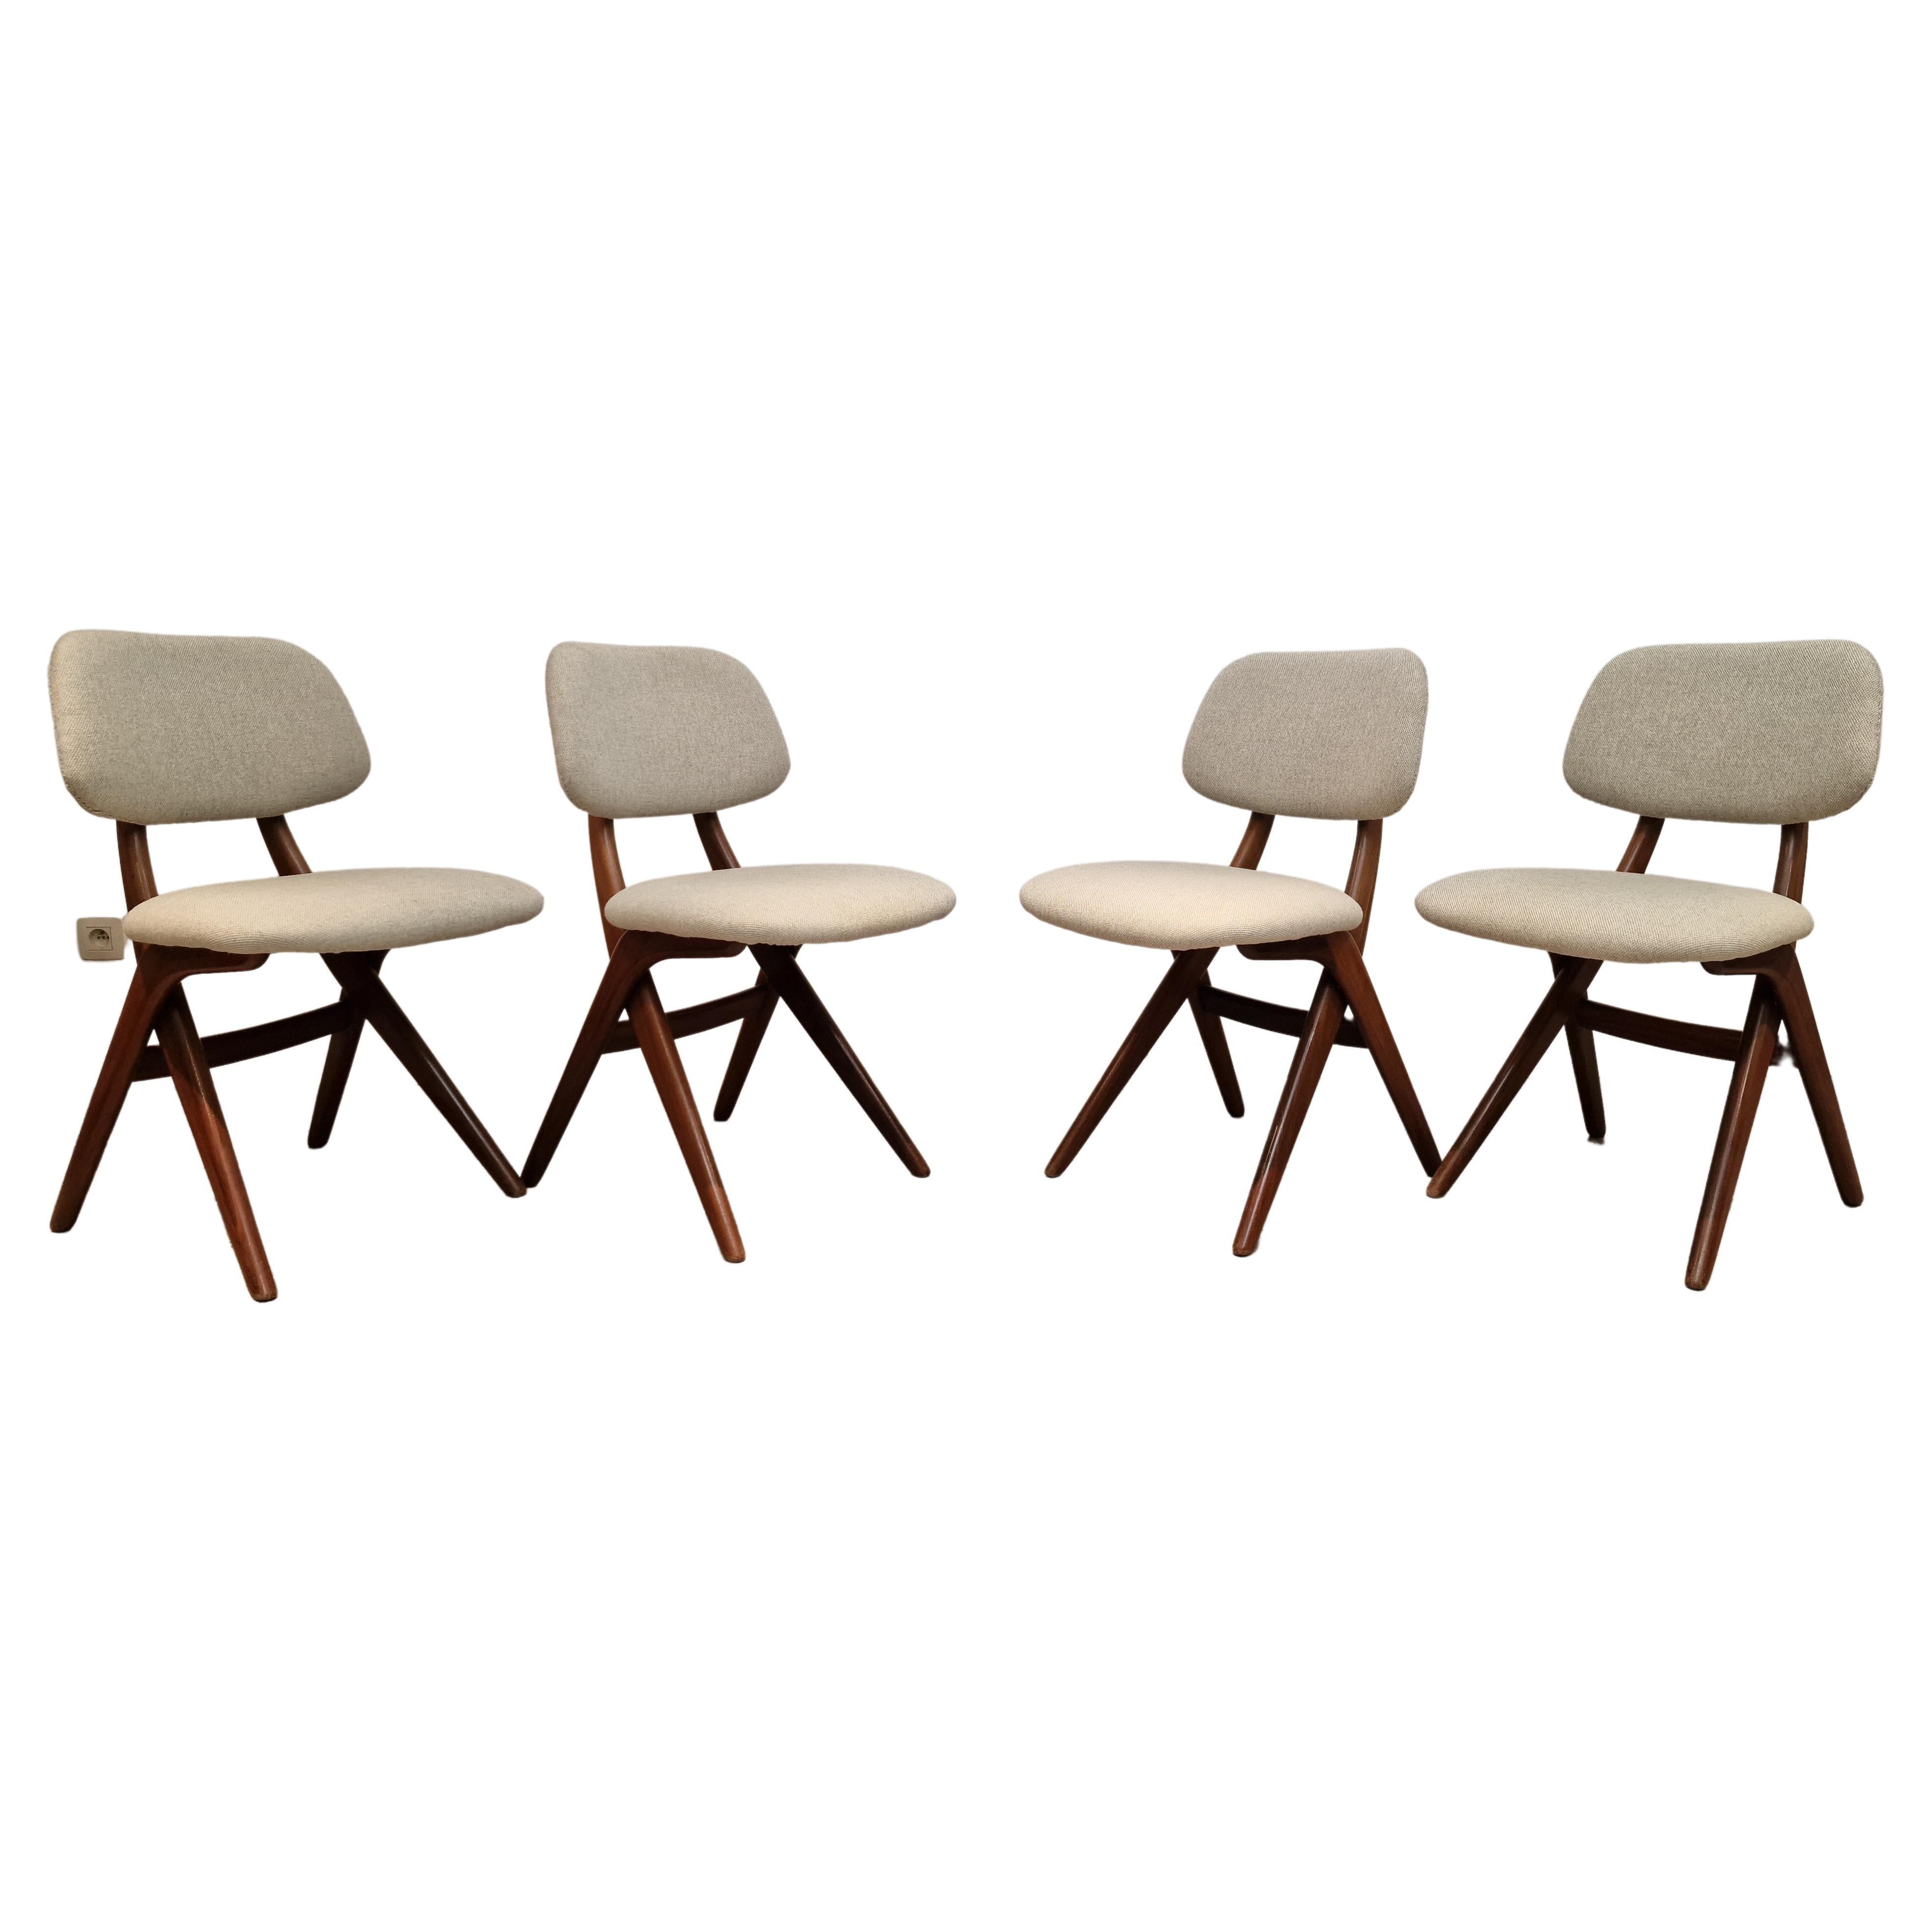 Four Scissor Chairs from Louis Van Teeffelen for Wébé For Sale